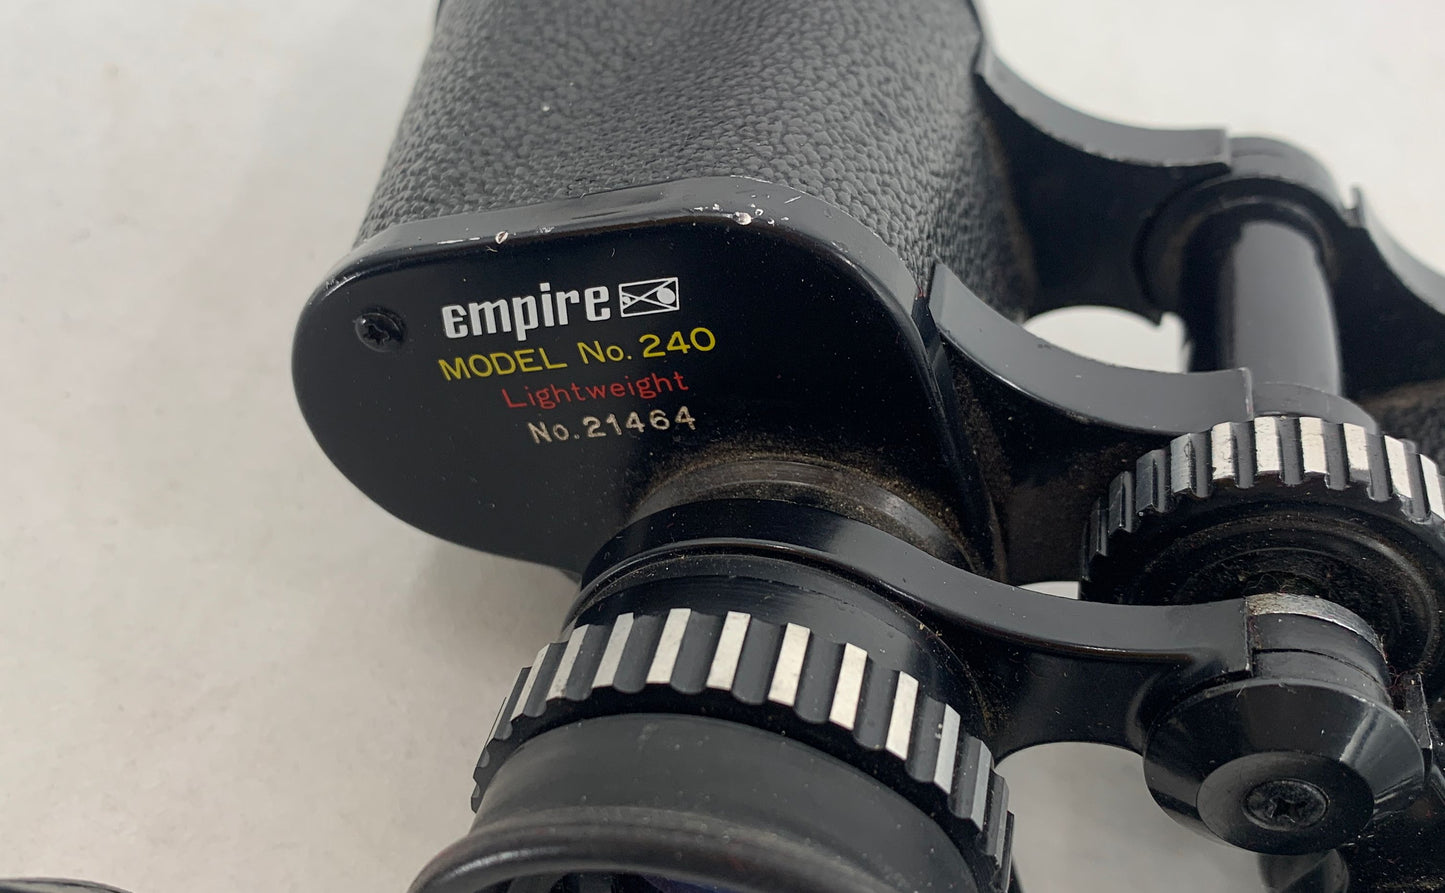 Empire Vintage Lightweight Fully Coated Optics Binoculars Model 240 No. 21464